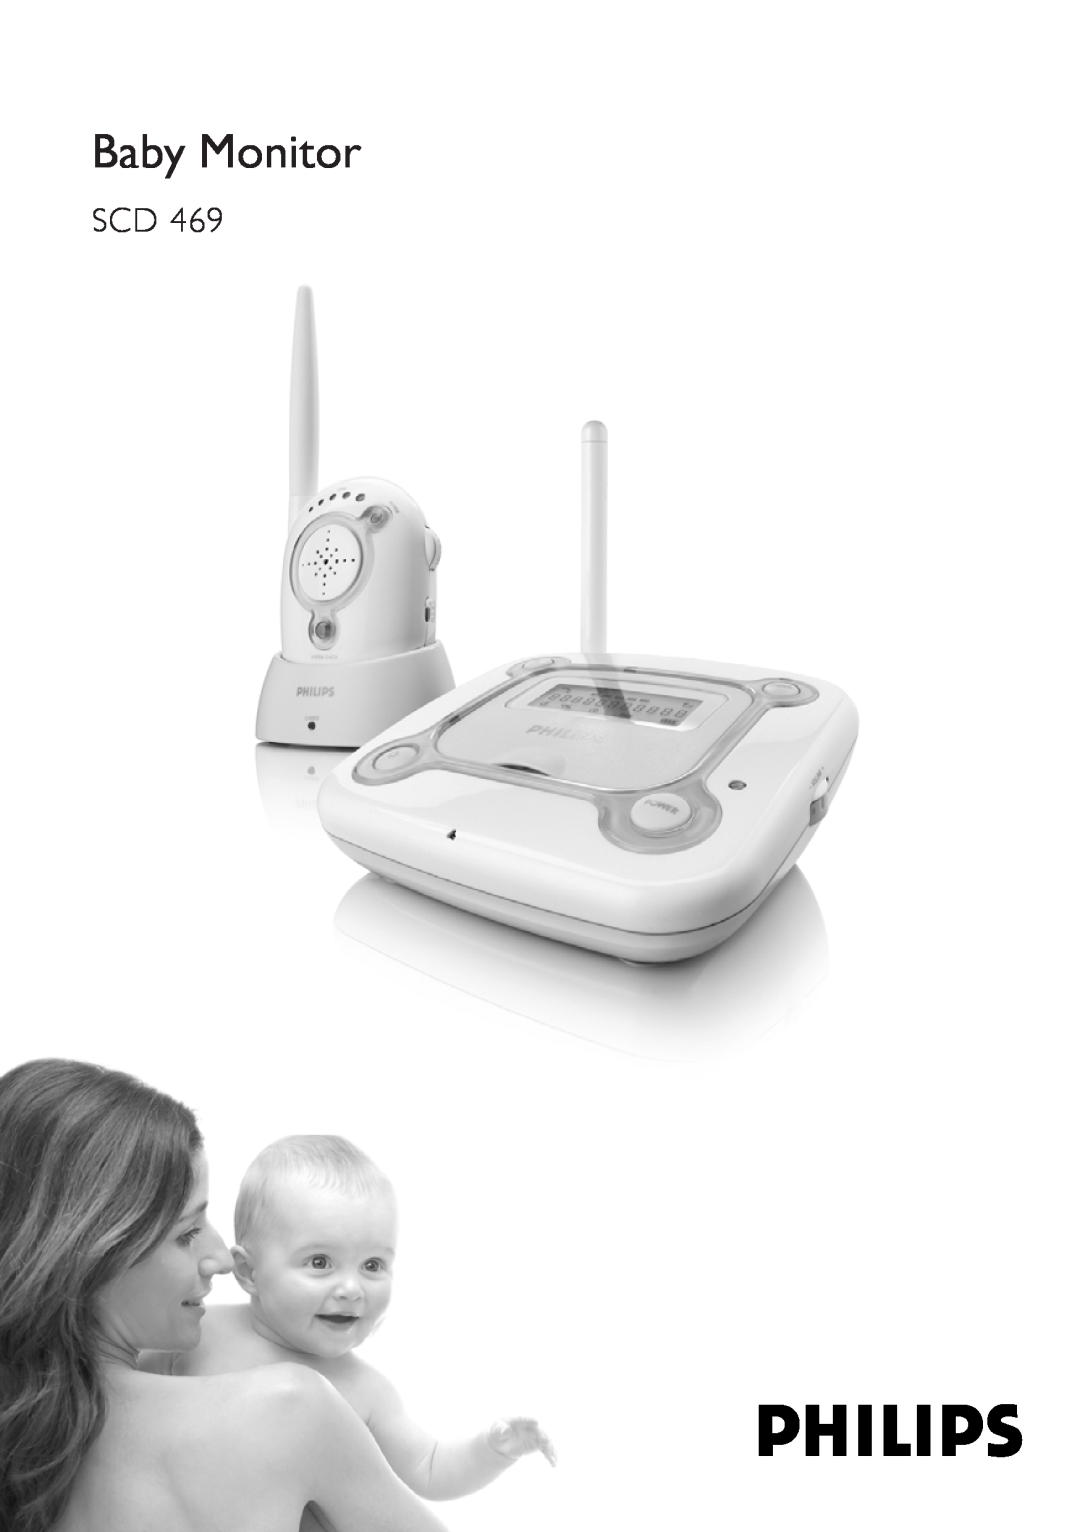 Philips SCD 469 manual Baby Monitor 